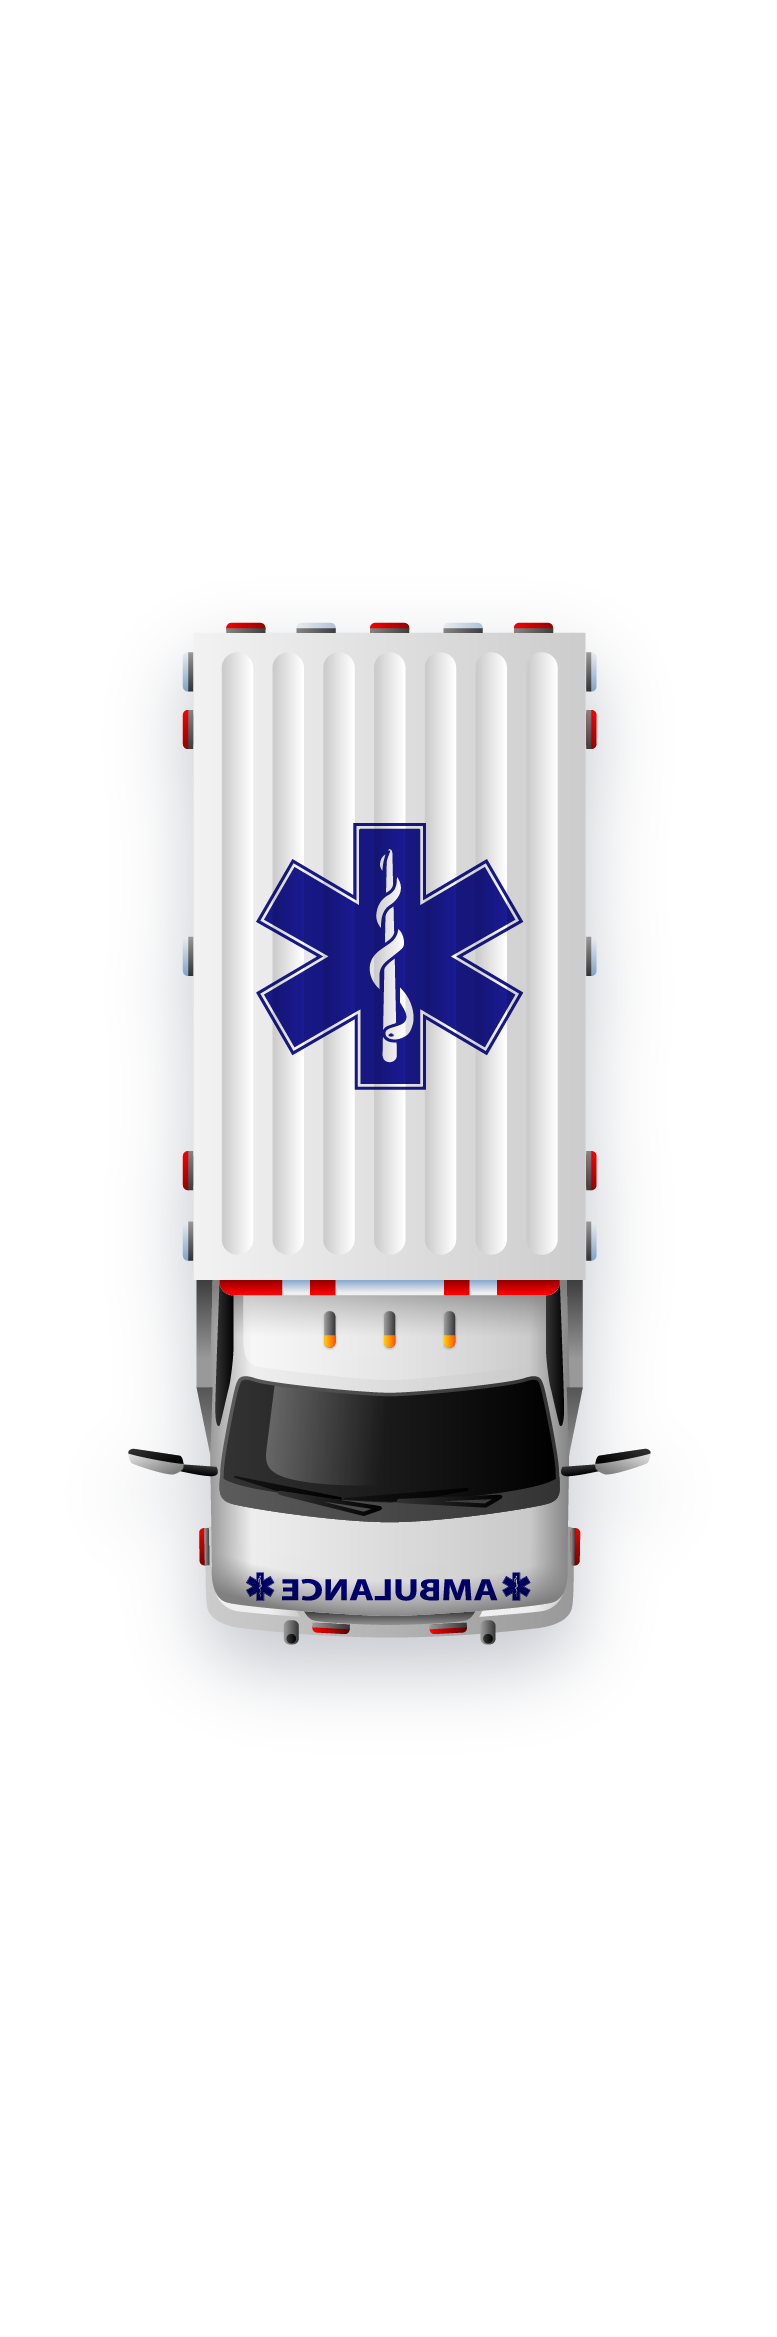 Medical vehicle